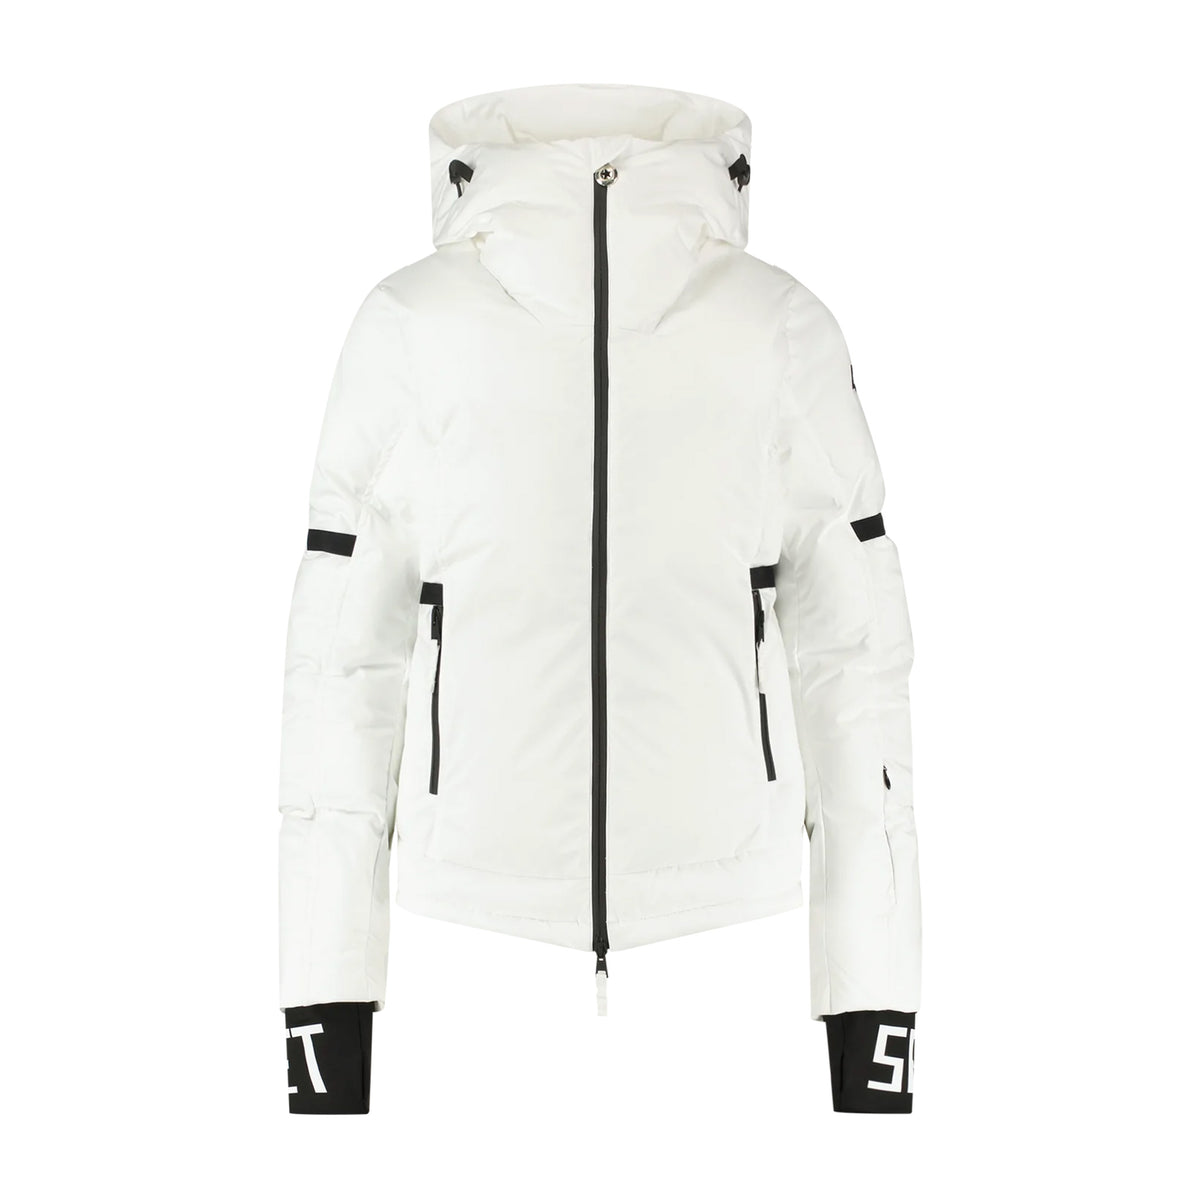 Joanna Ski Jacket in White by Jetset | London Ski Co — London Ski Co.